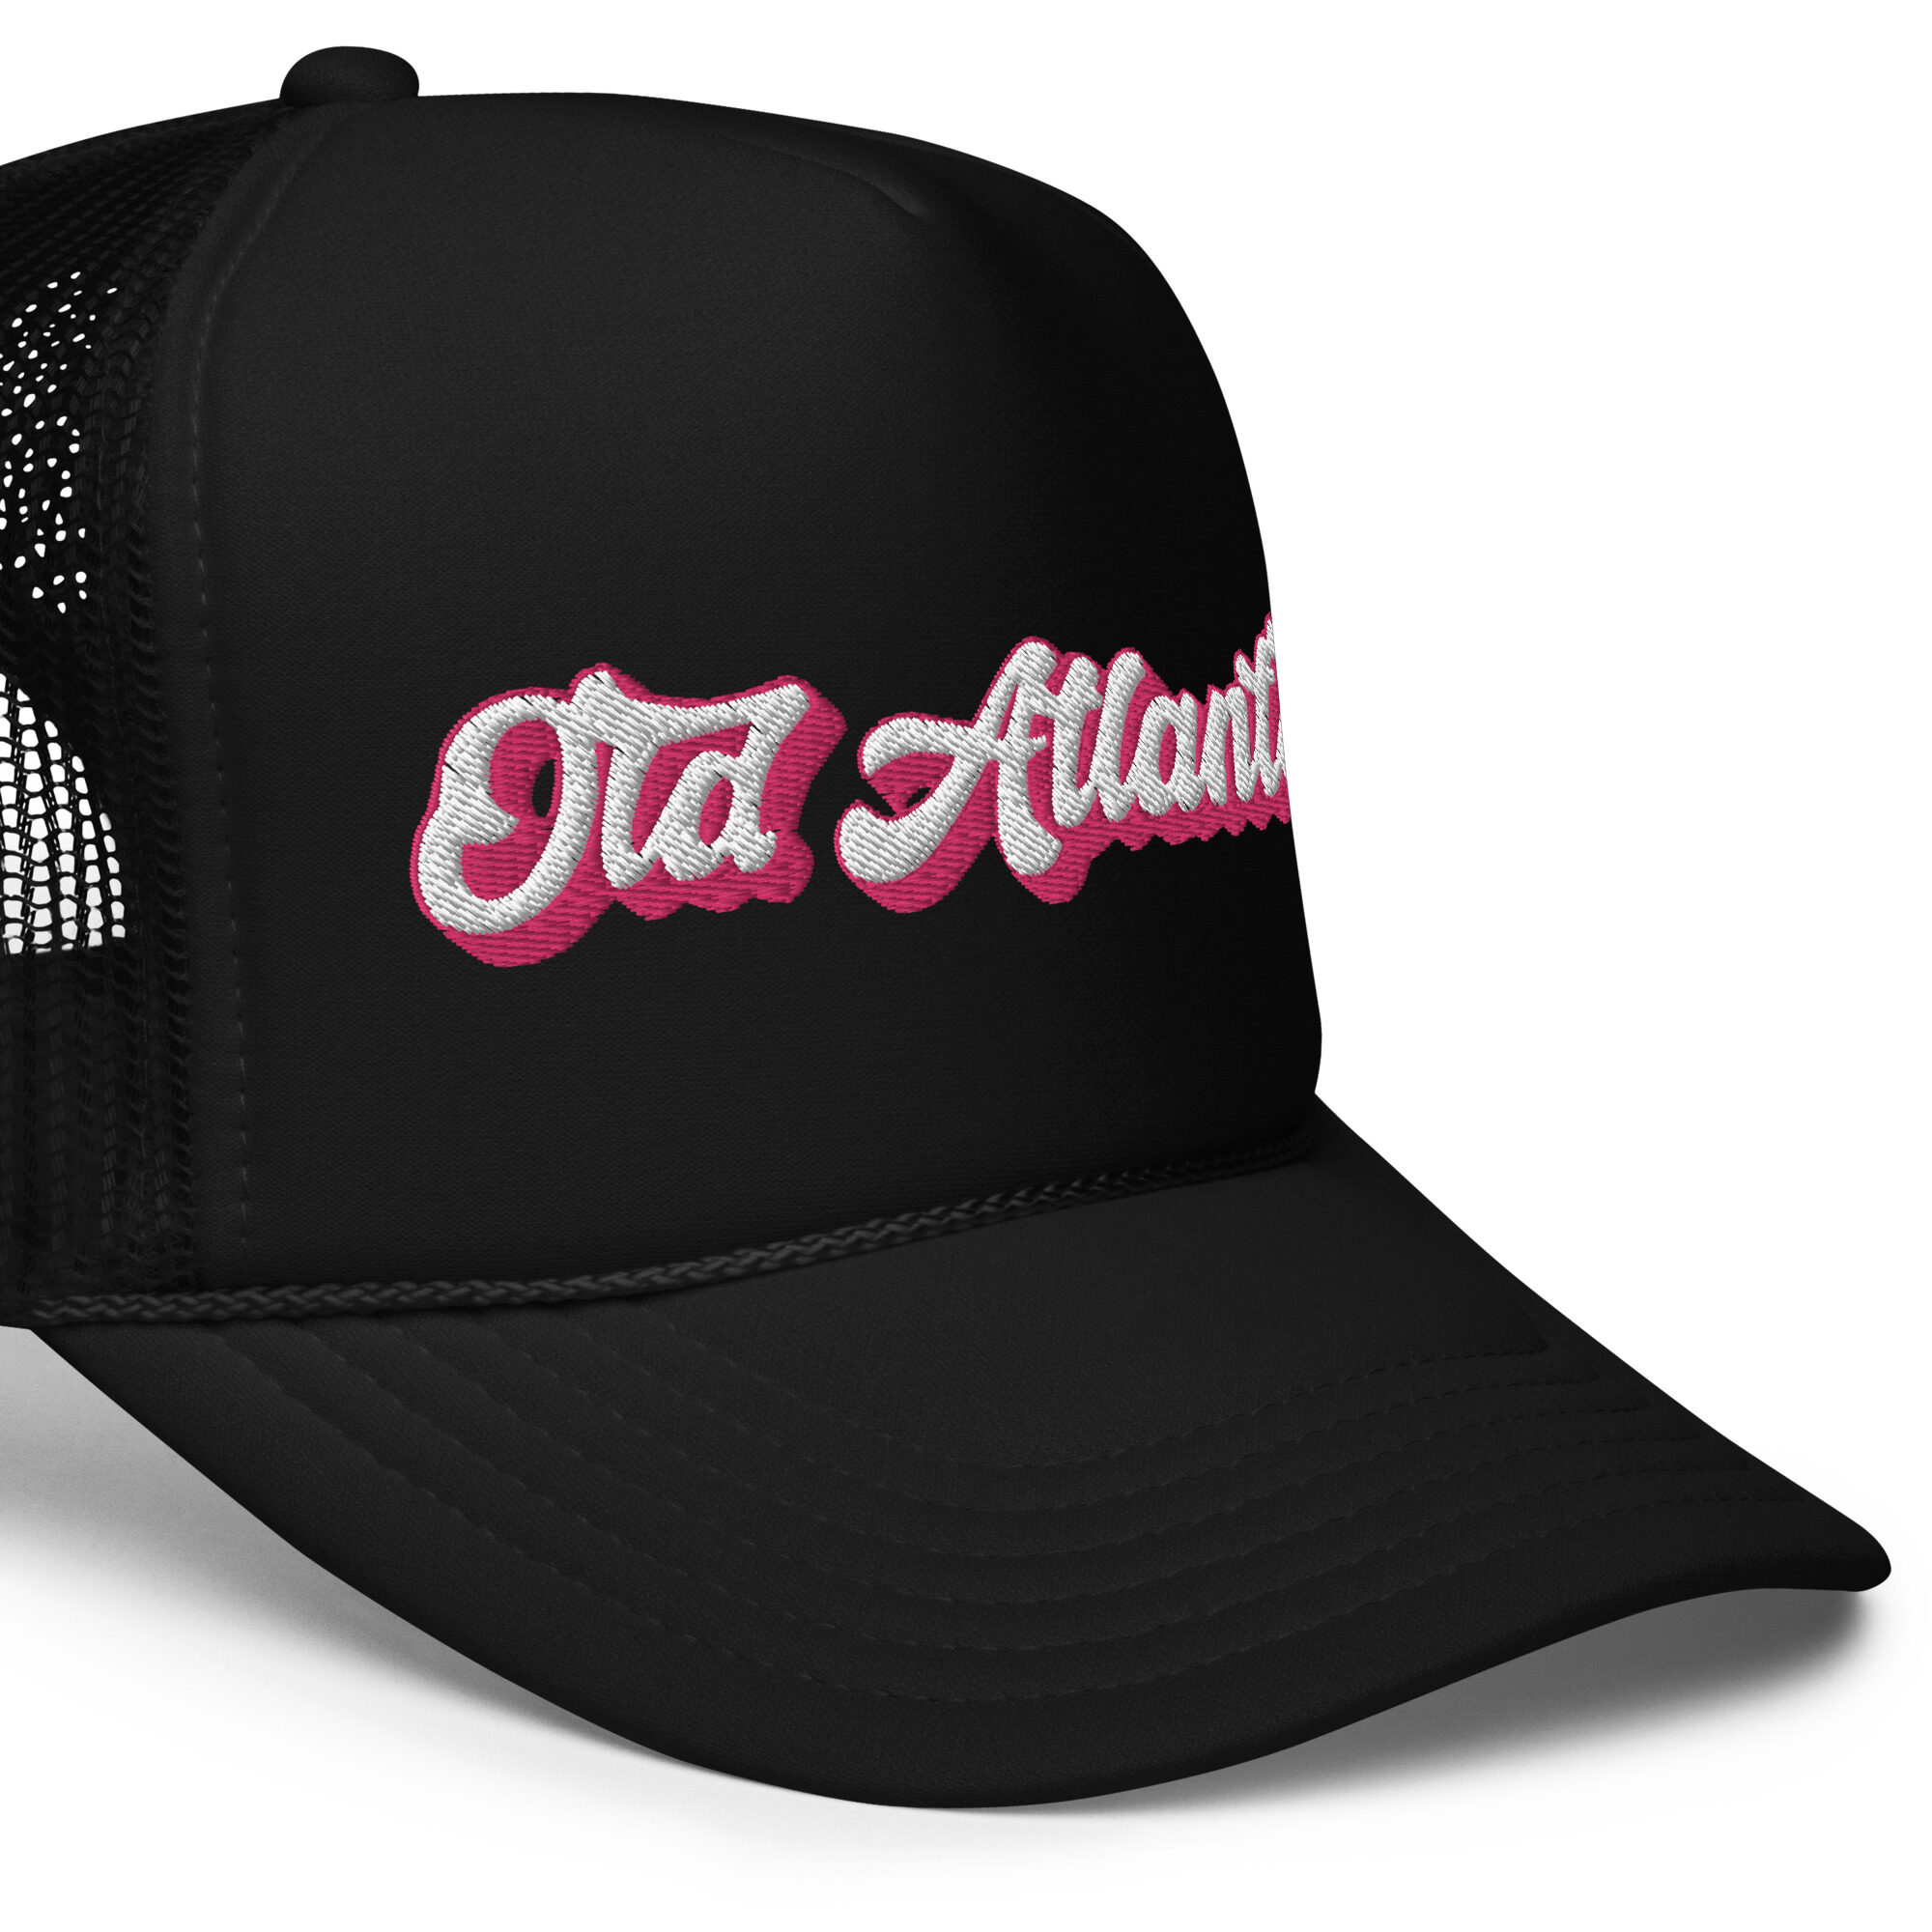 Black and Pink Trucker Hat Blank Cobra Brand - New